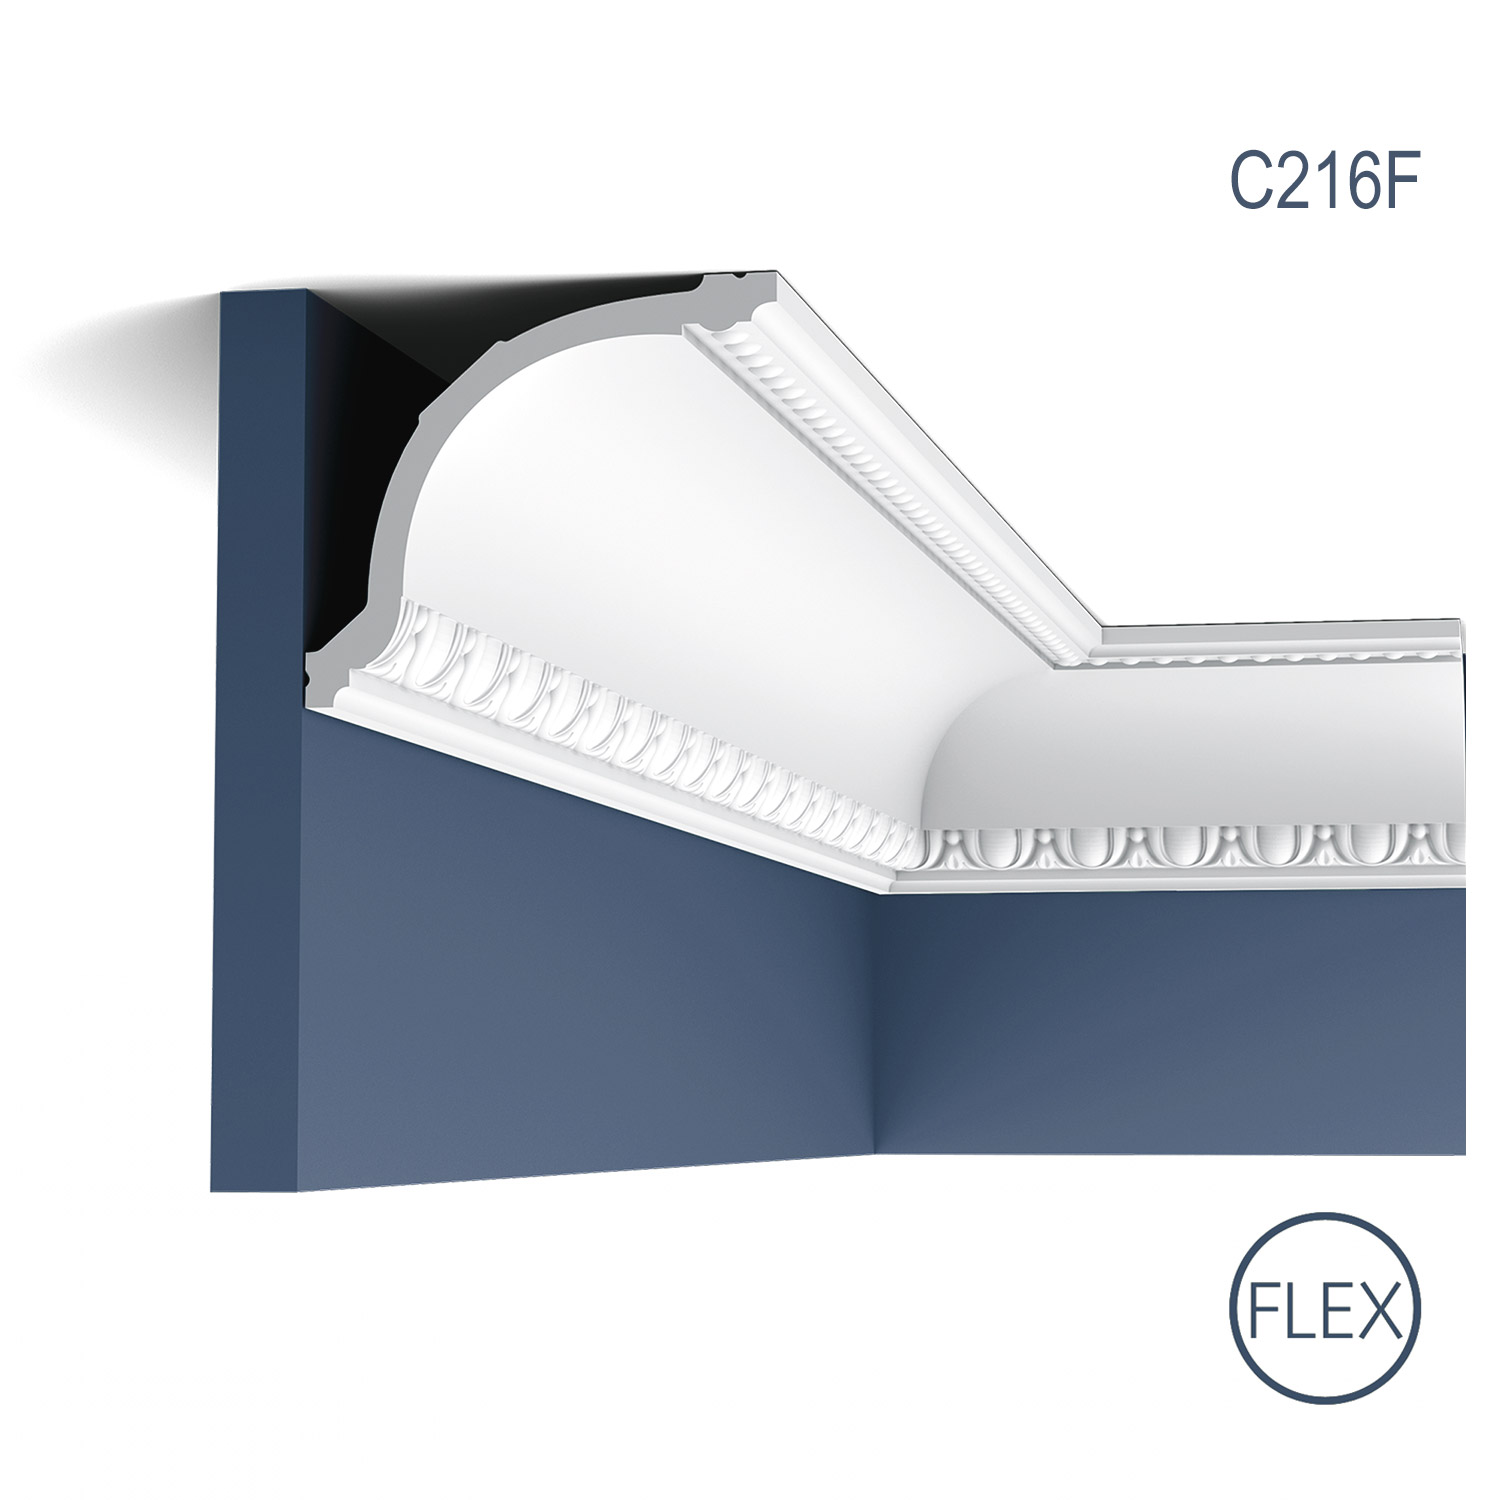 Cornisa Flex Luxxus C216F, Dimensiuni: 200 X 11.6 X 13.3 cm, Orac Decor